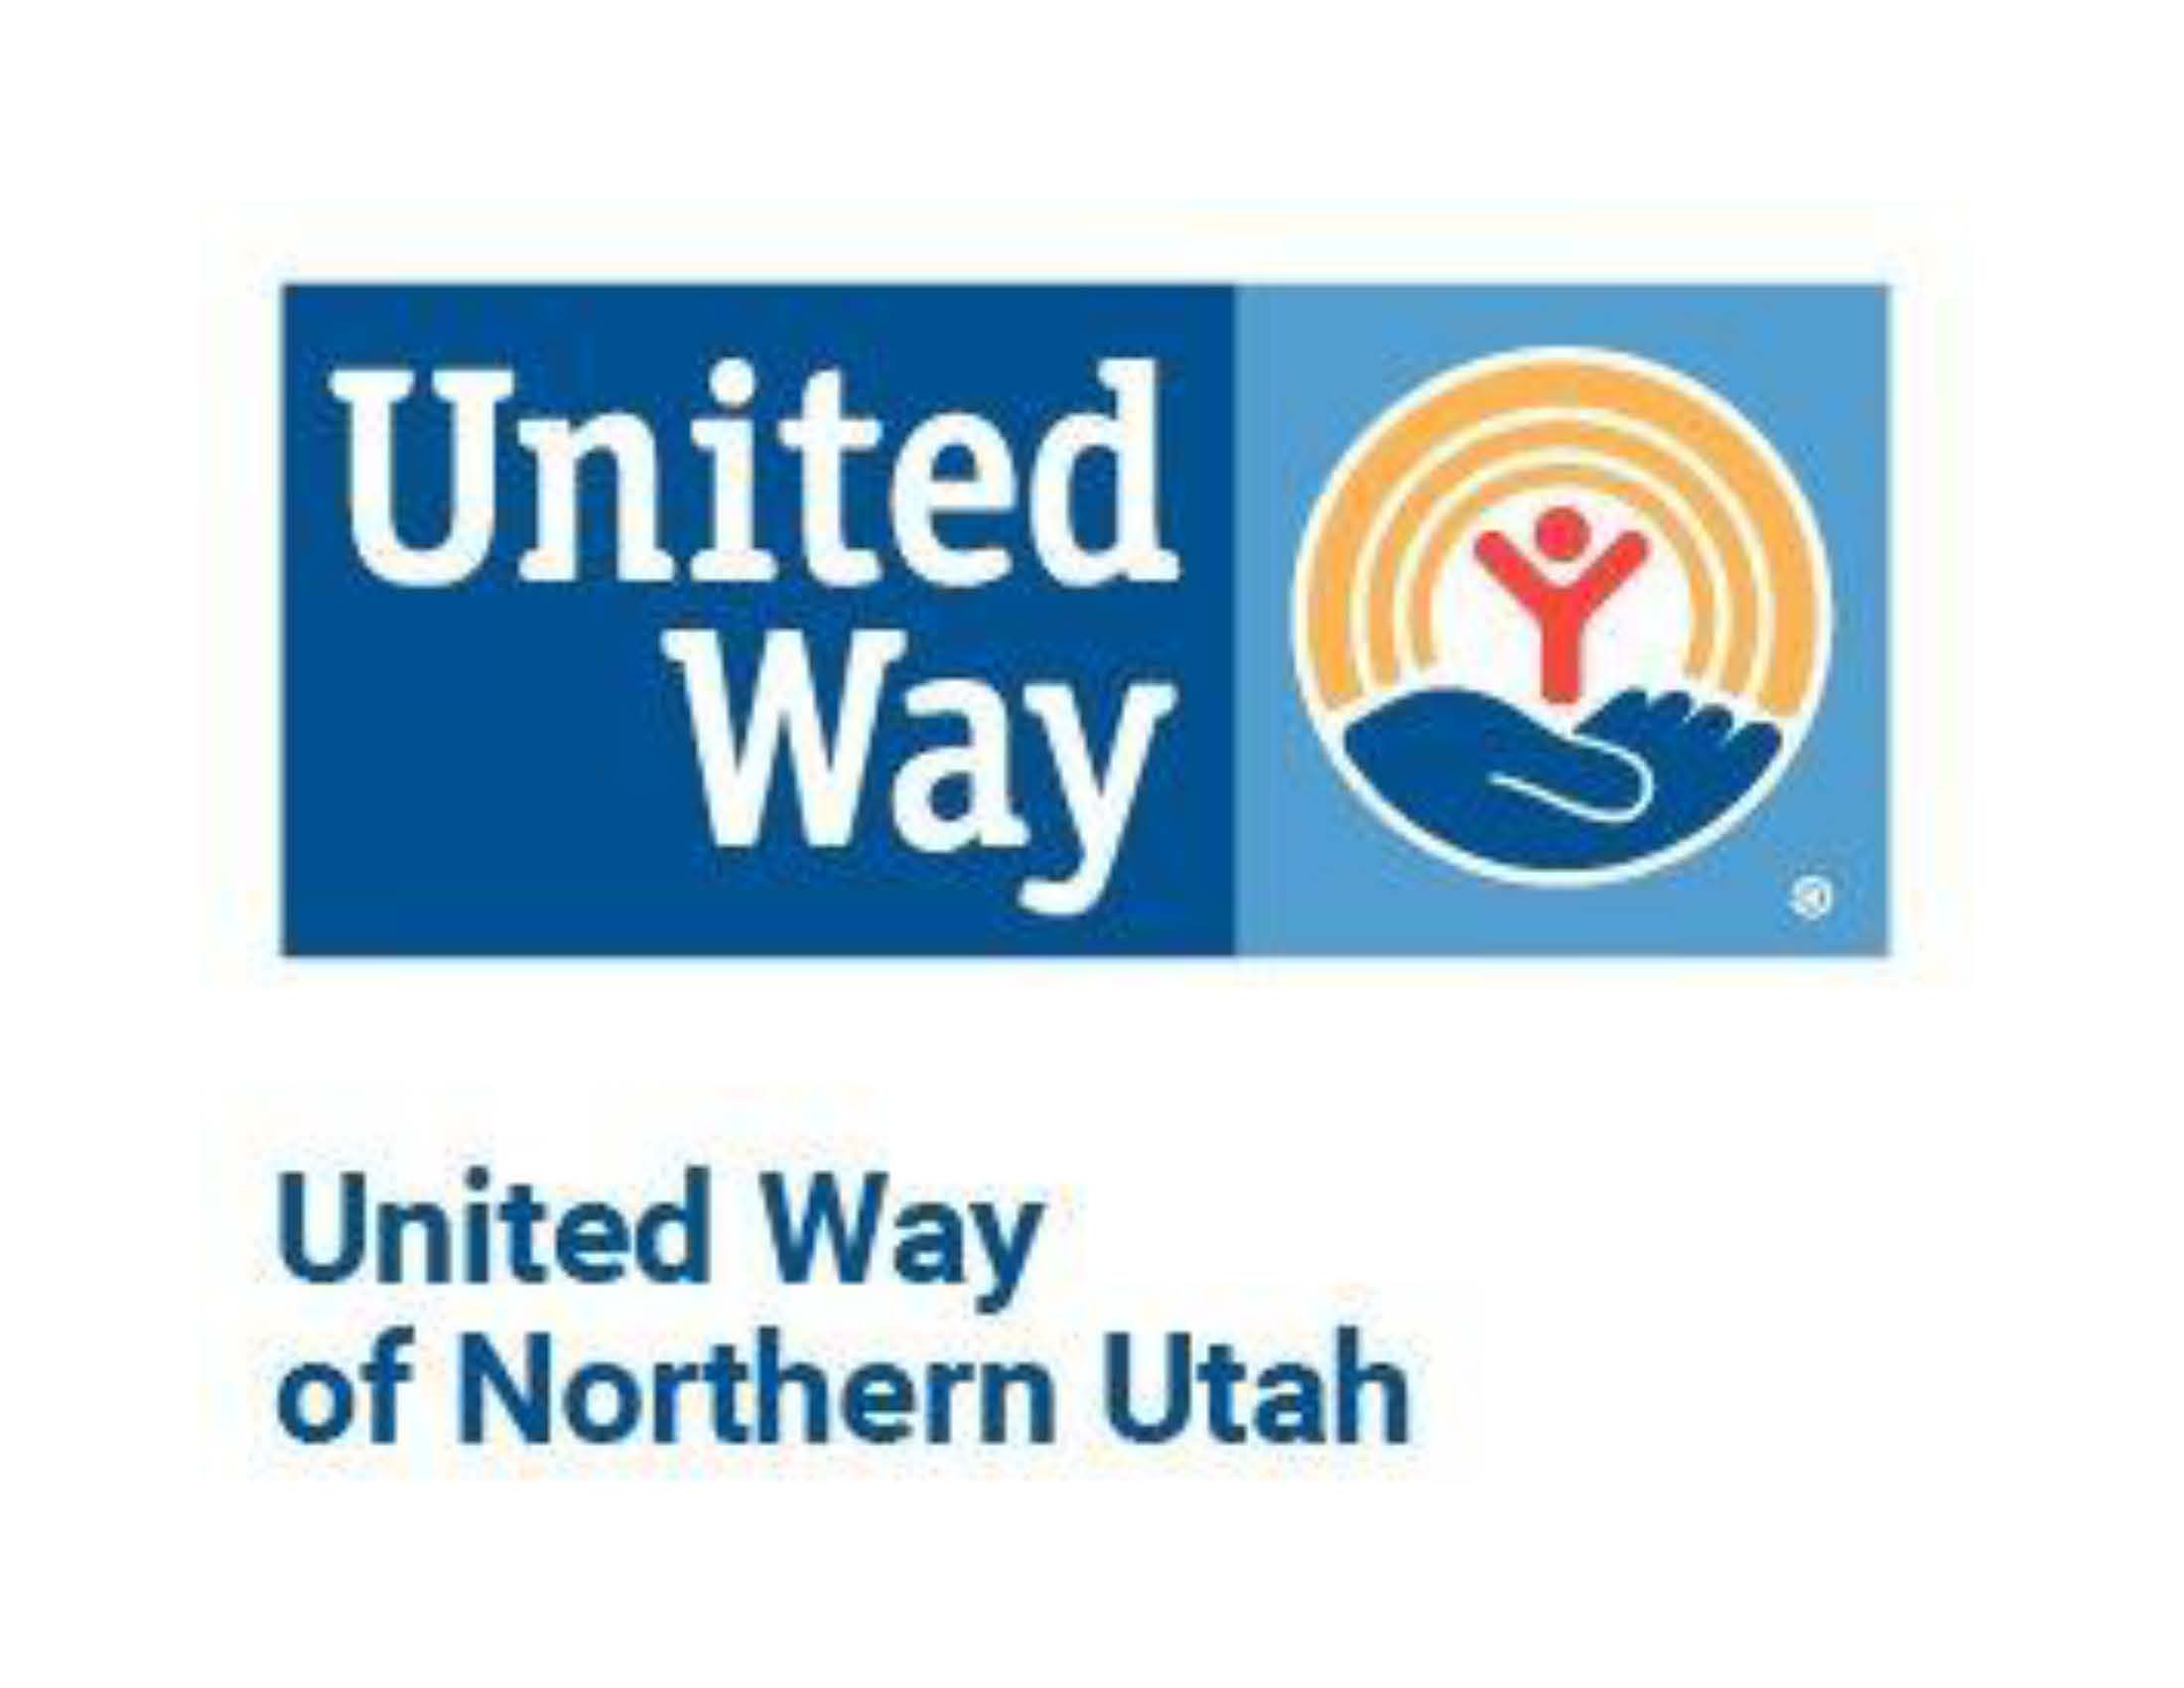 United Way Northern Utah